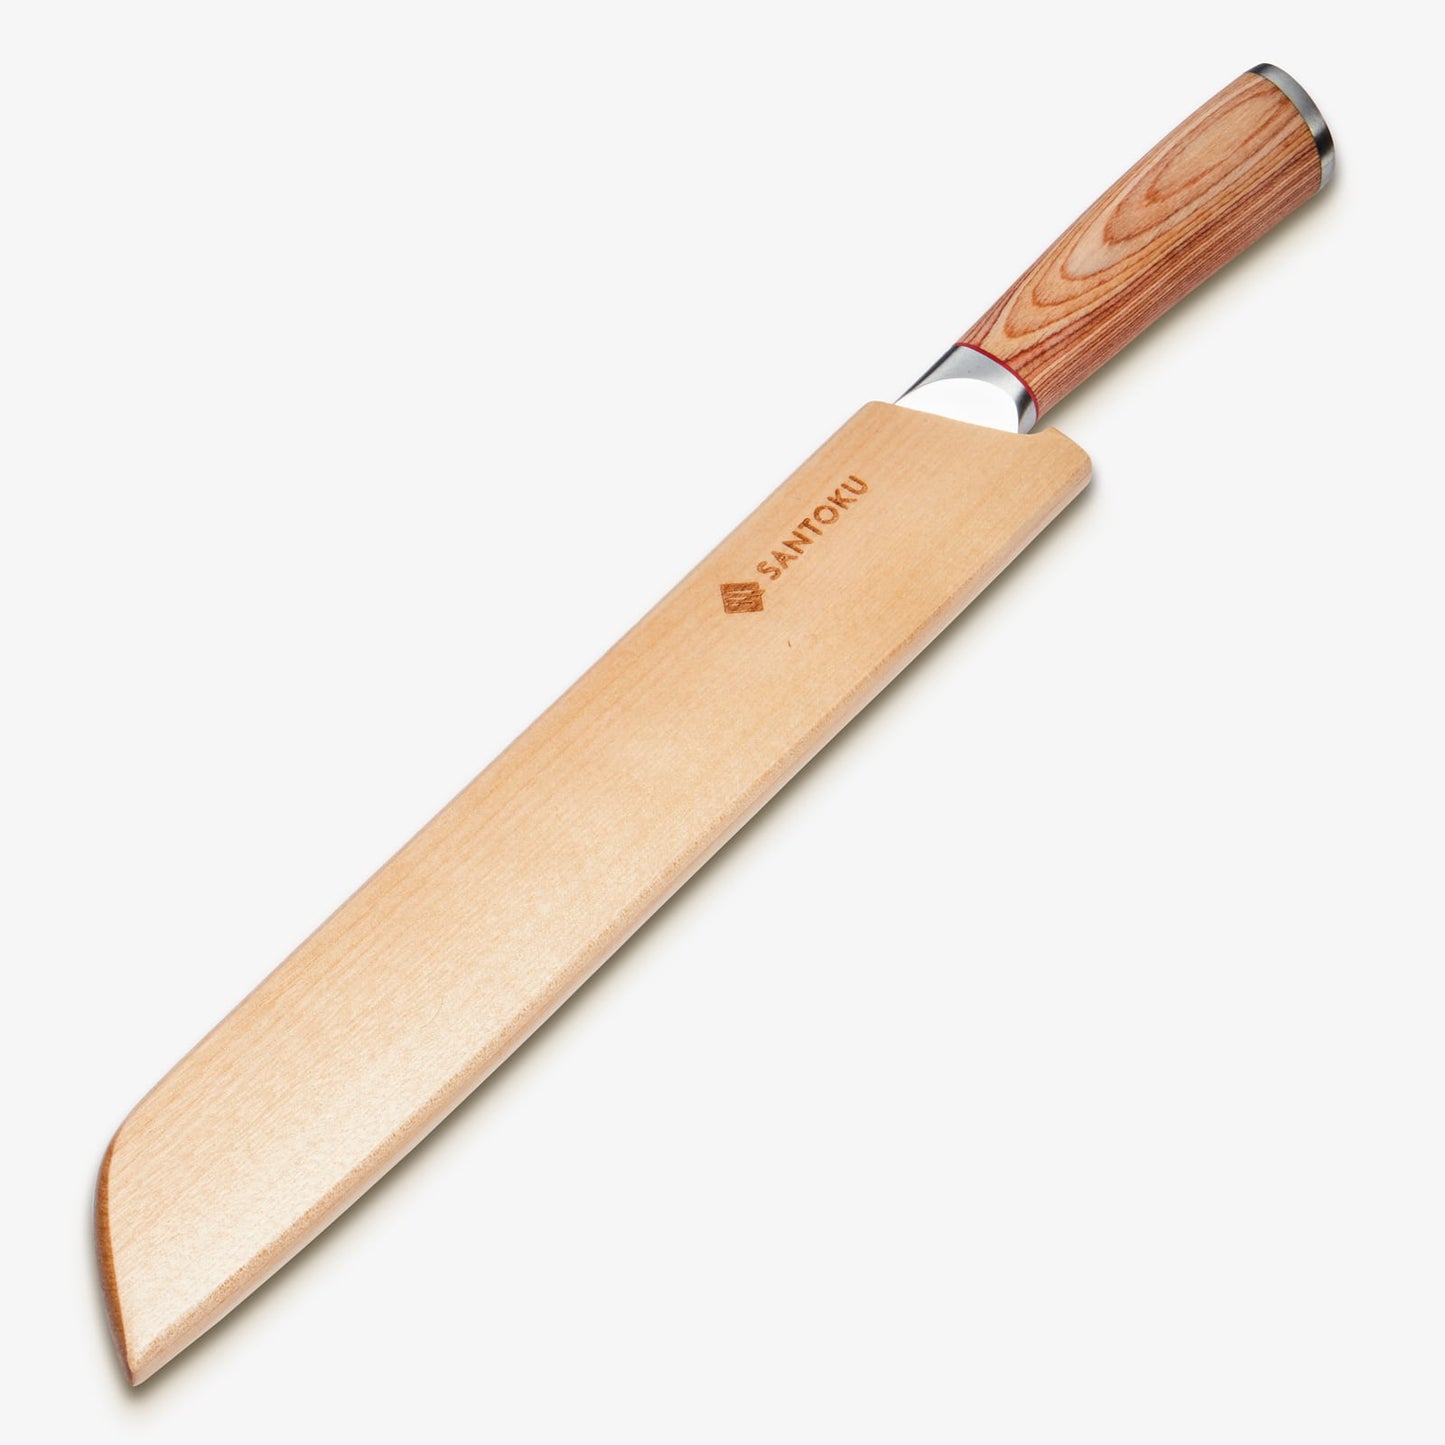 Haruta (はる はる) 10 tommer brødkniv